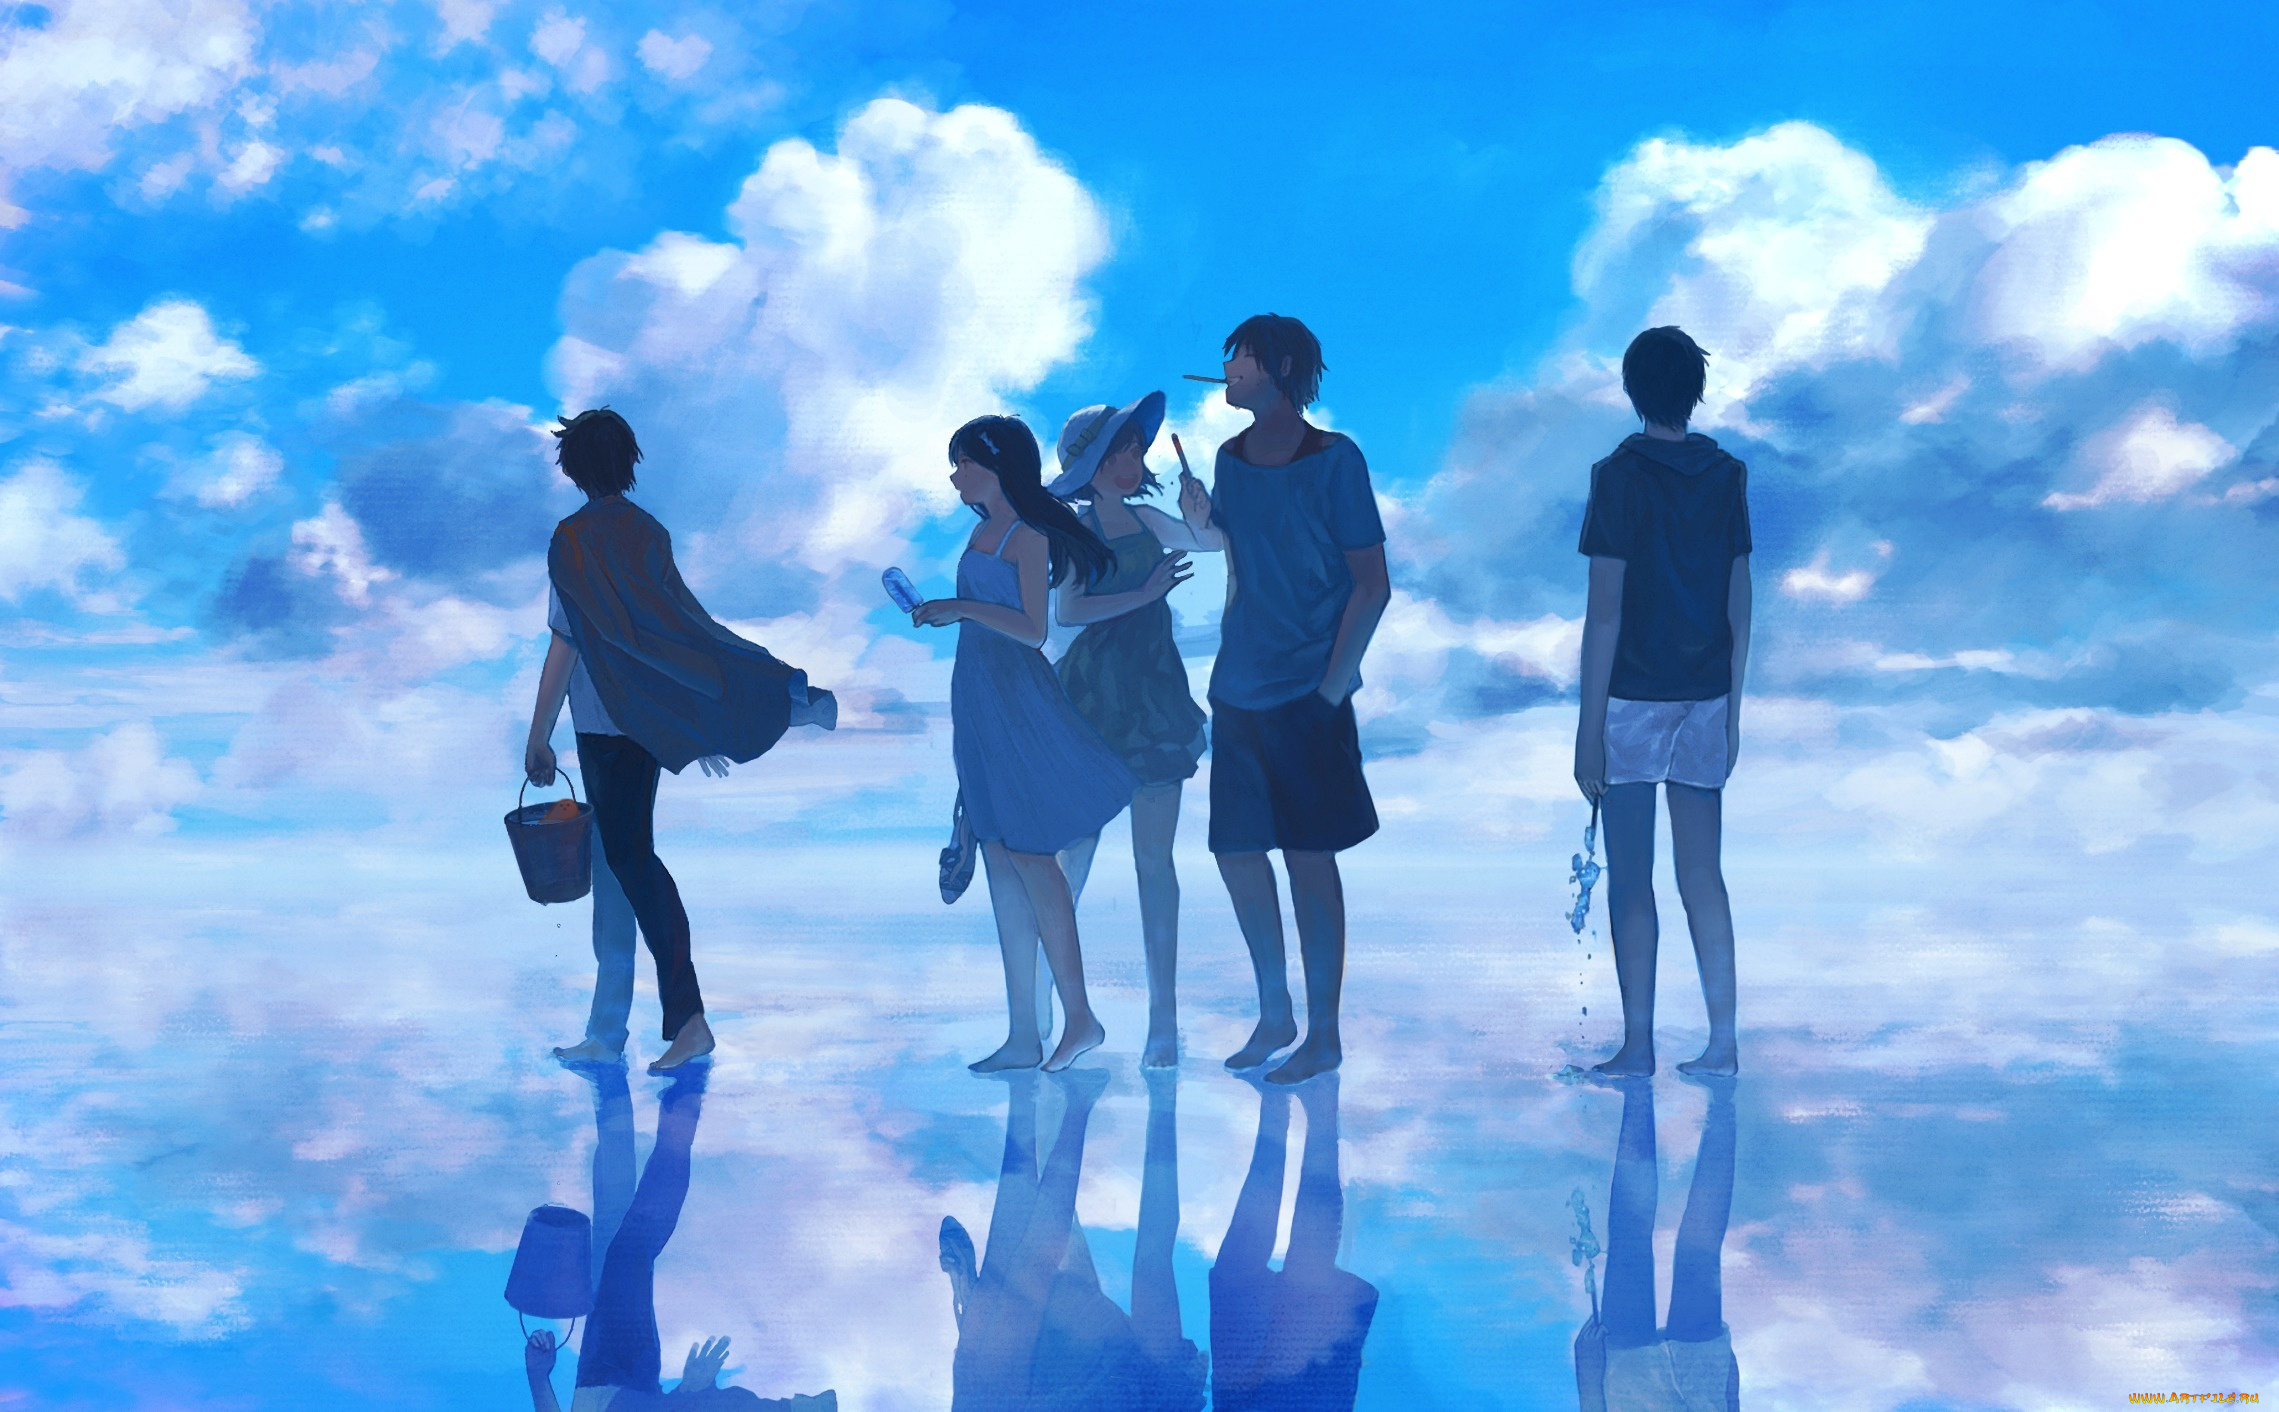 аниме, unknown, , другое, радость, шляпа, девушки, мороженое, отражение, парни, небо, облака, вода, ведро, takeji, арт